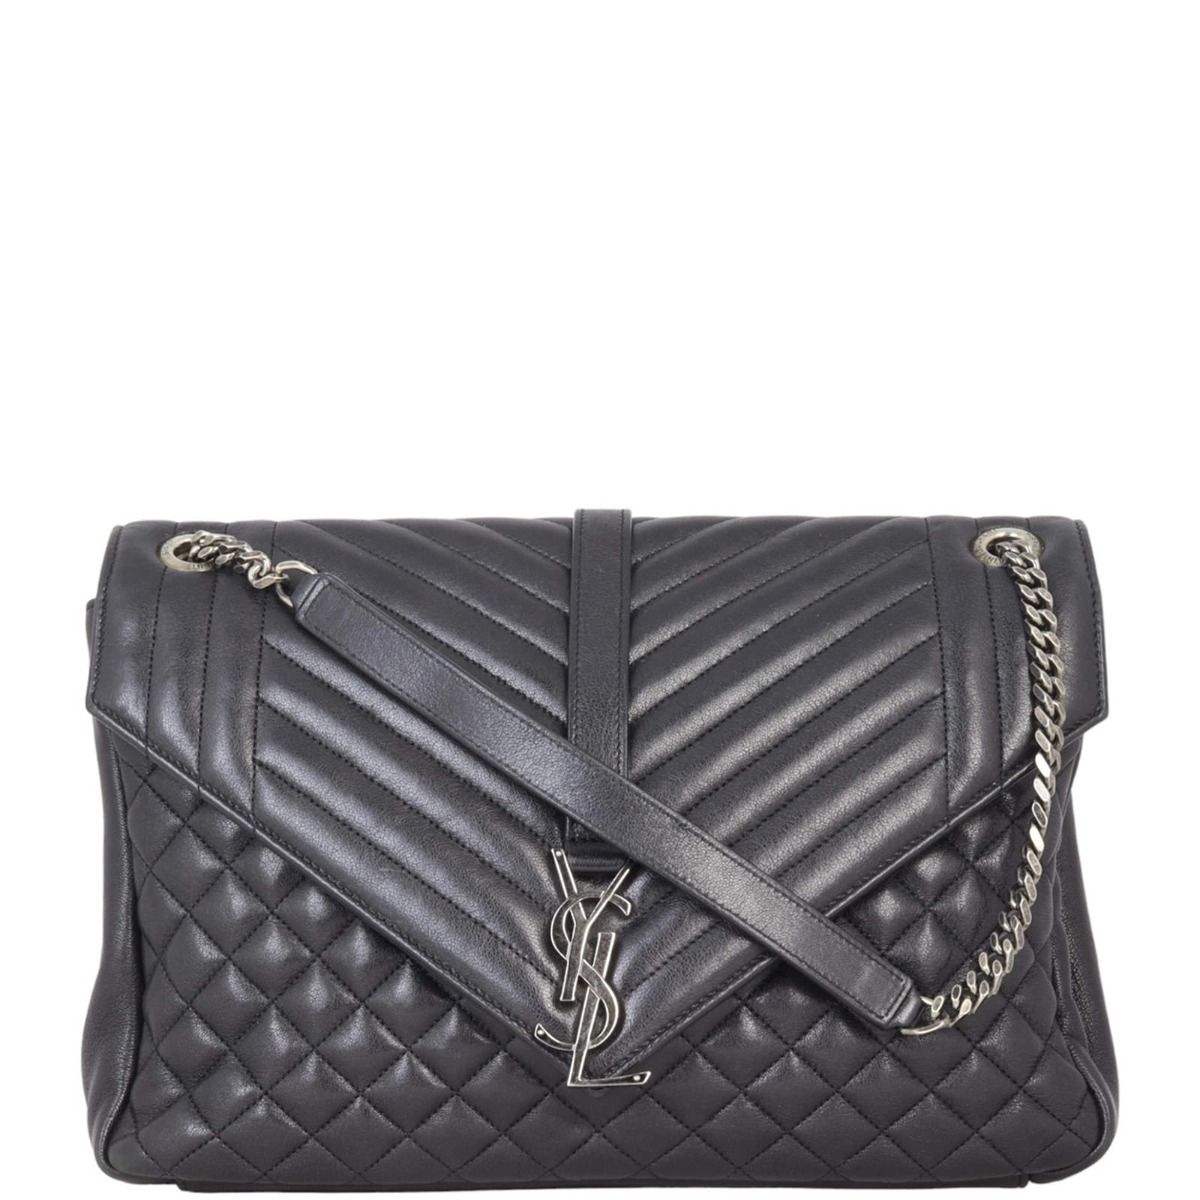 Becky leather handbag Saint Laurent Black in Leather - 39624875